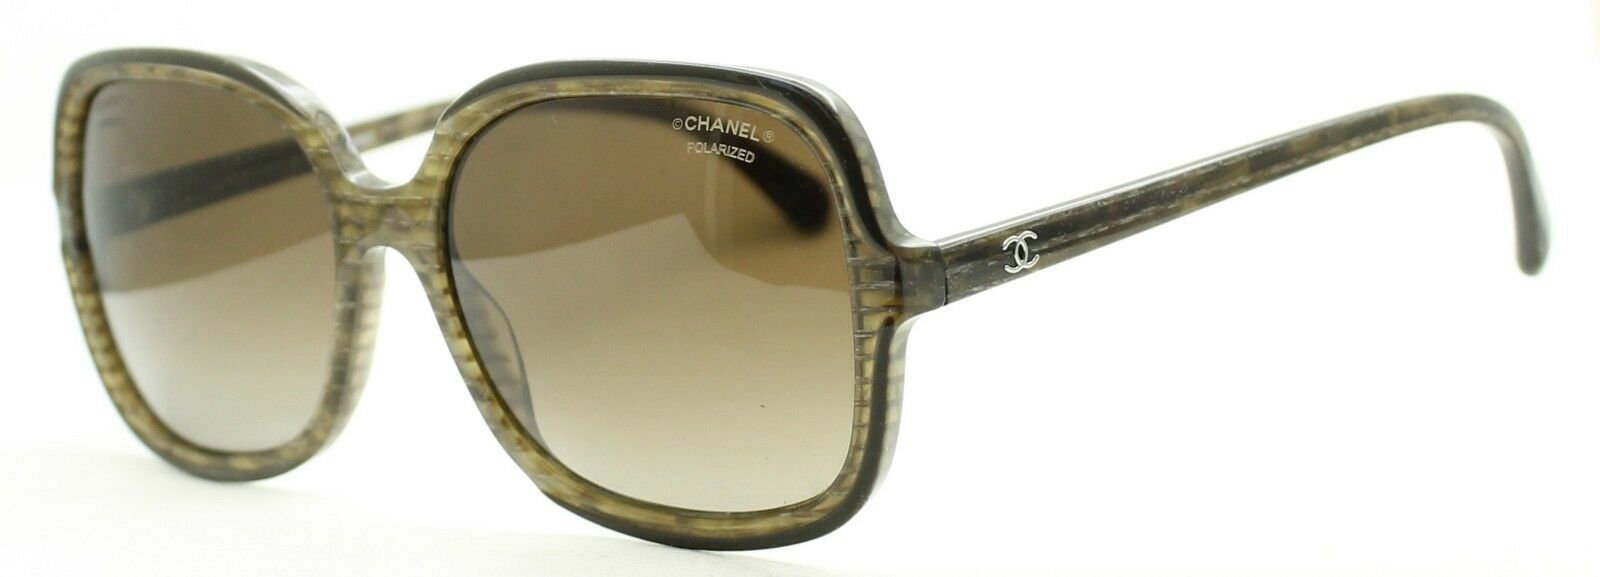 CHANEL 3384 c.1191 Eyewear 52mm FRAMES Eyeglasses RX Optical Glasses New -  Italy - GGV Eyewear